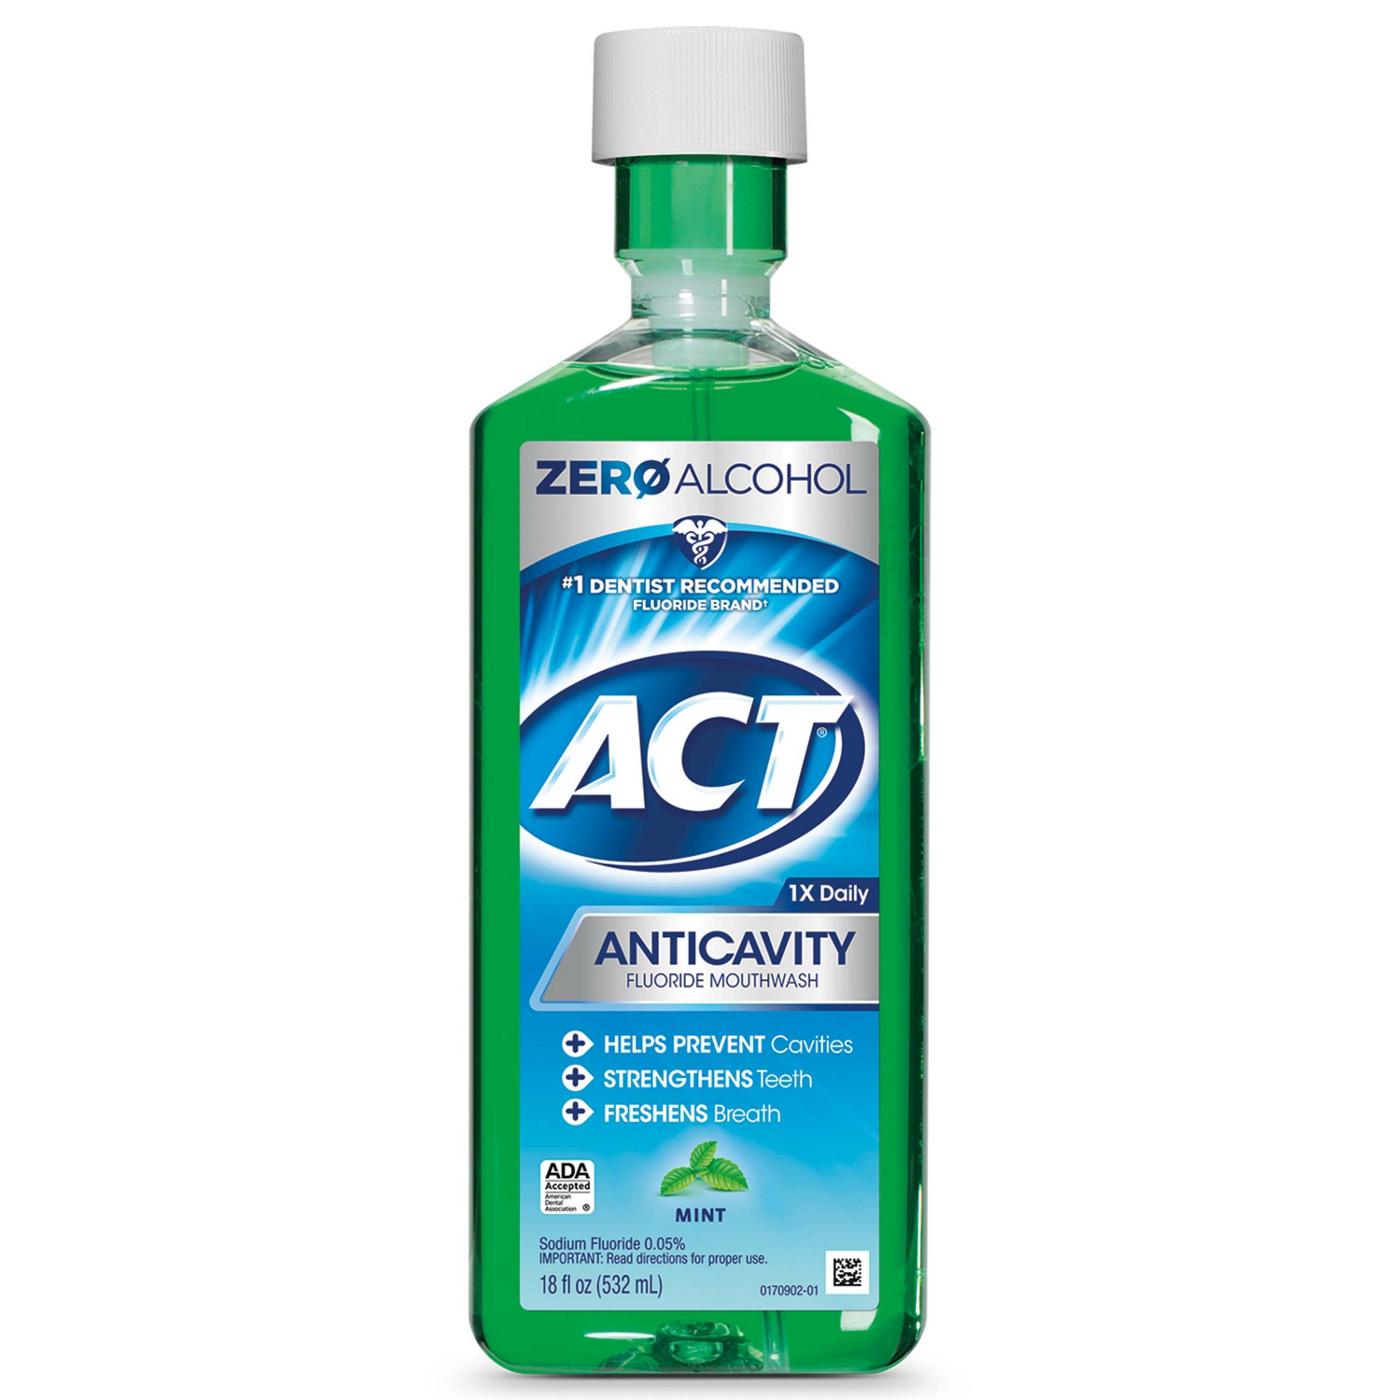 ACT Anticavity Fluoride Mouthwash - Mint; image 1 of 6